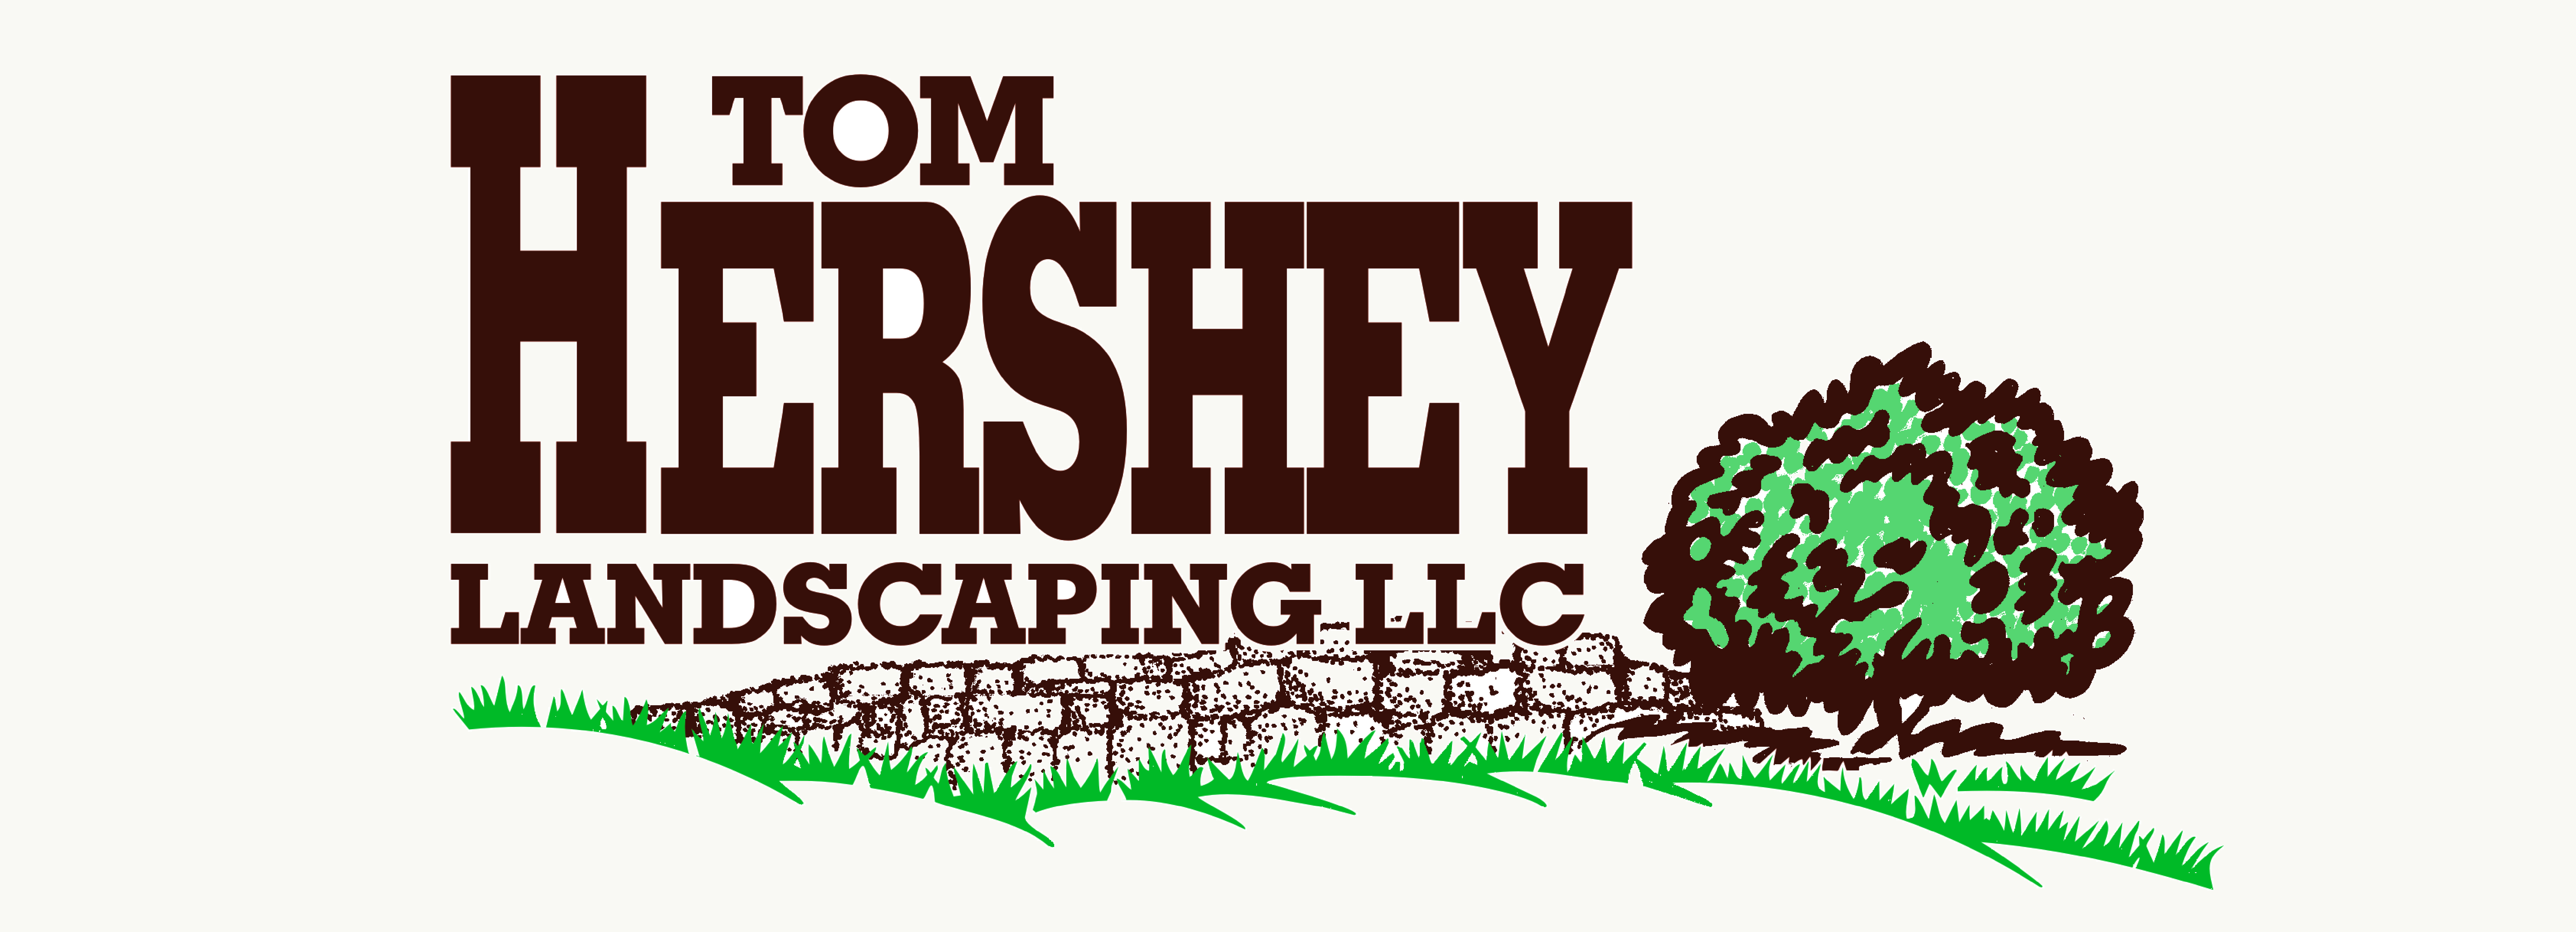 Tom Hershey Landscaping